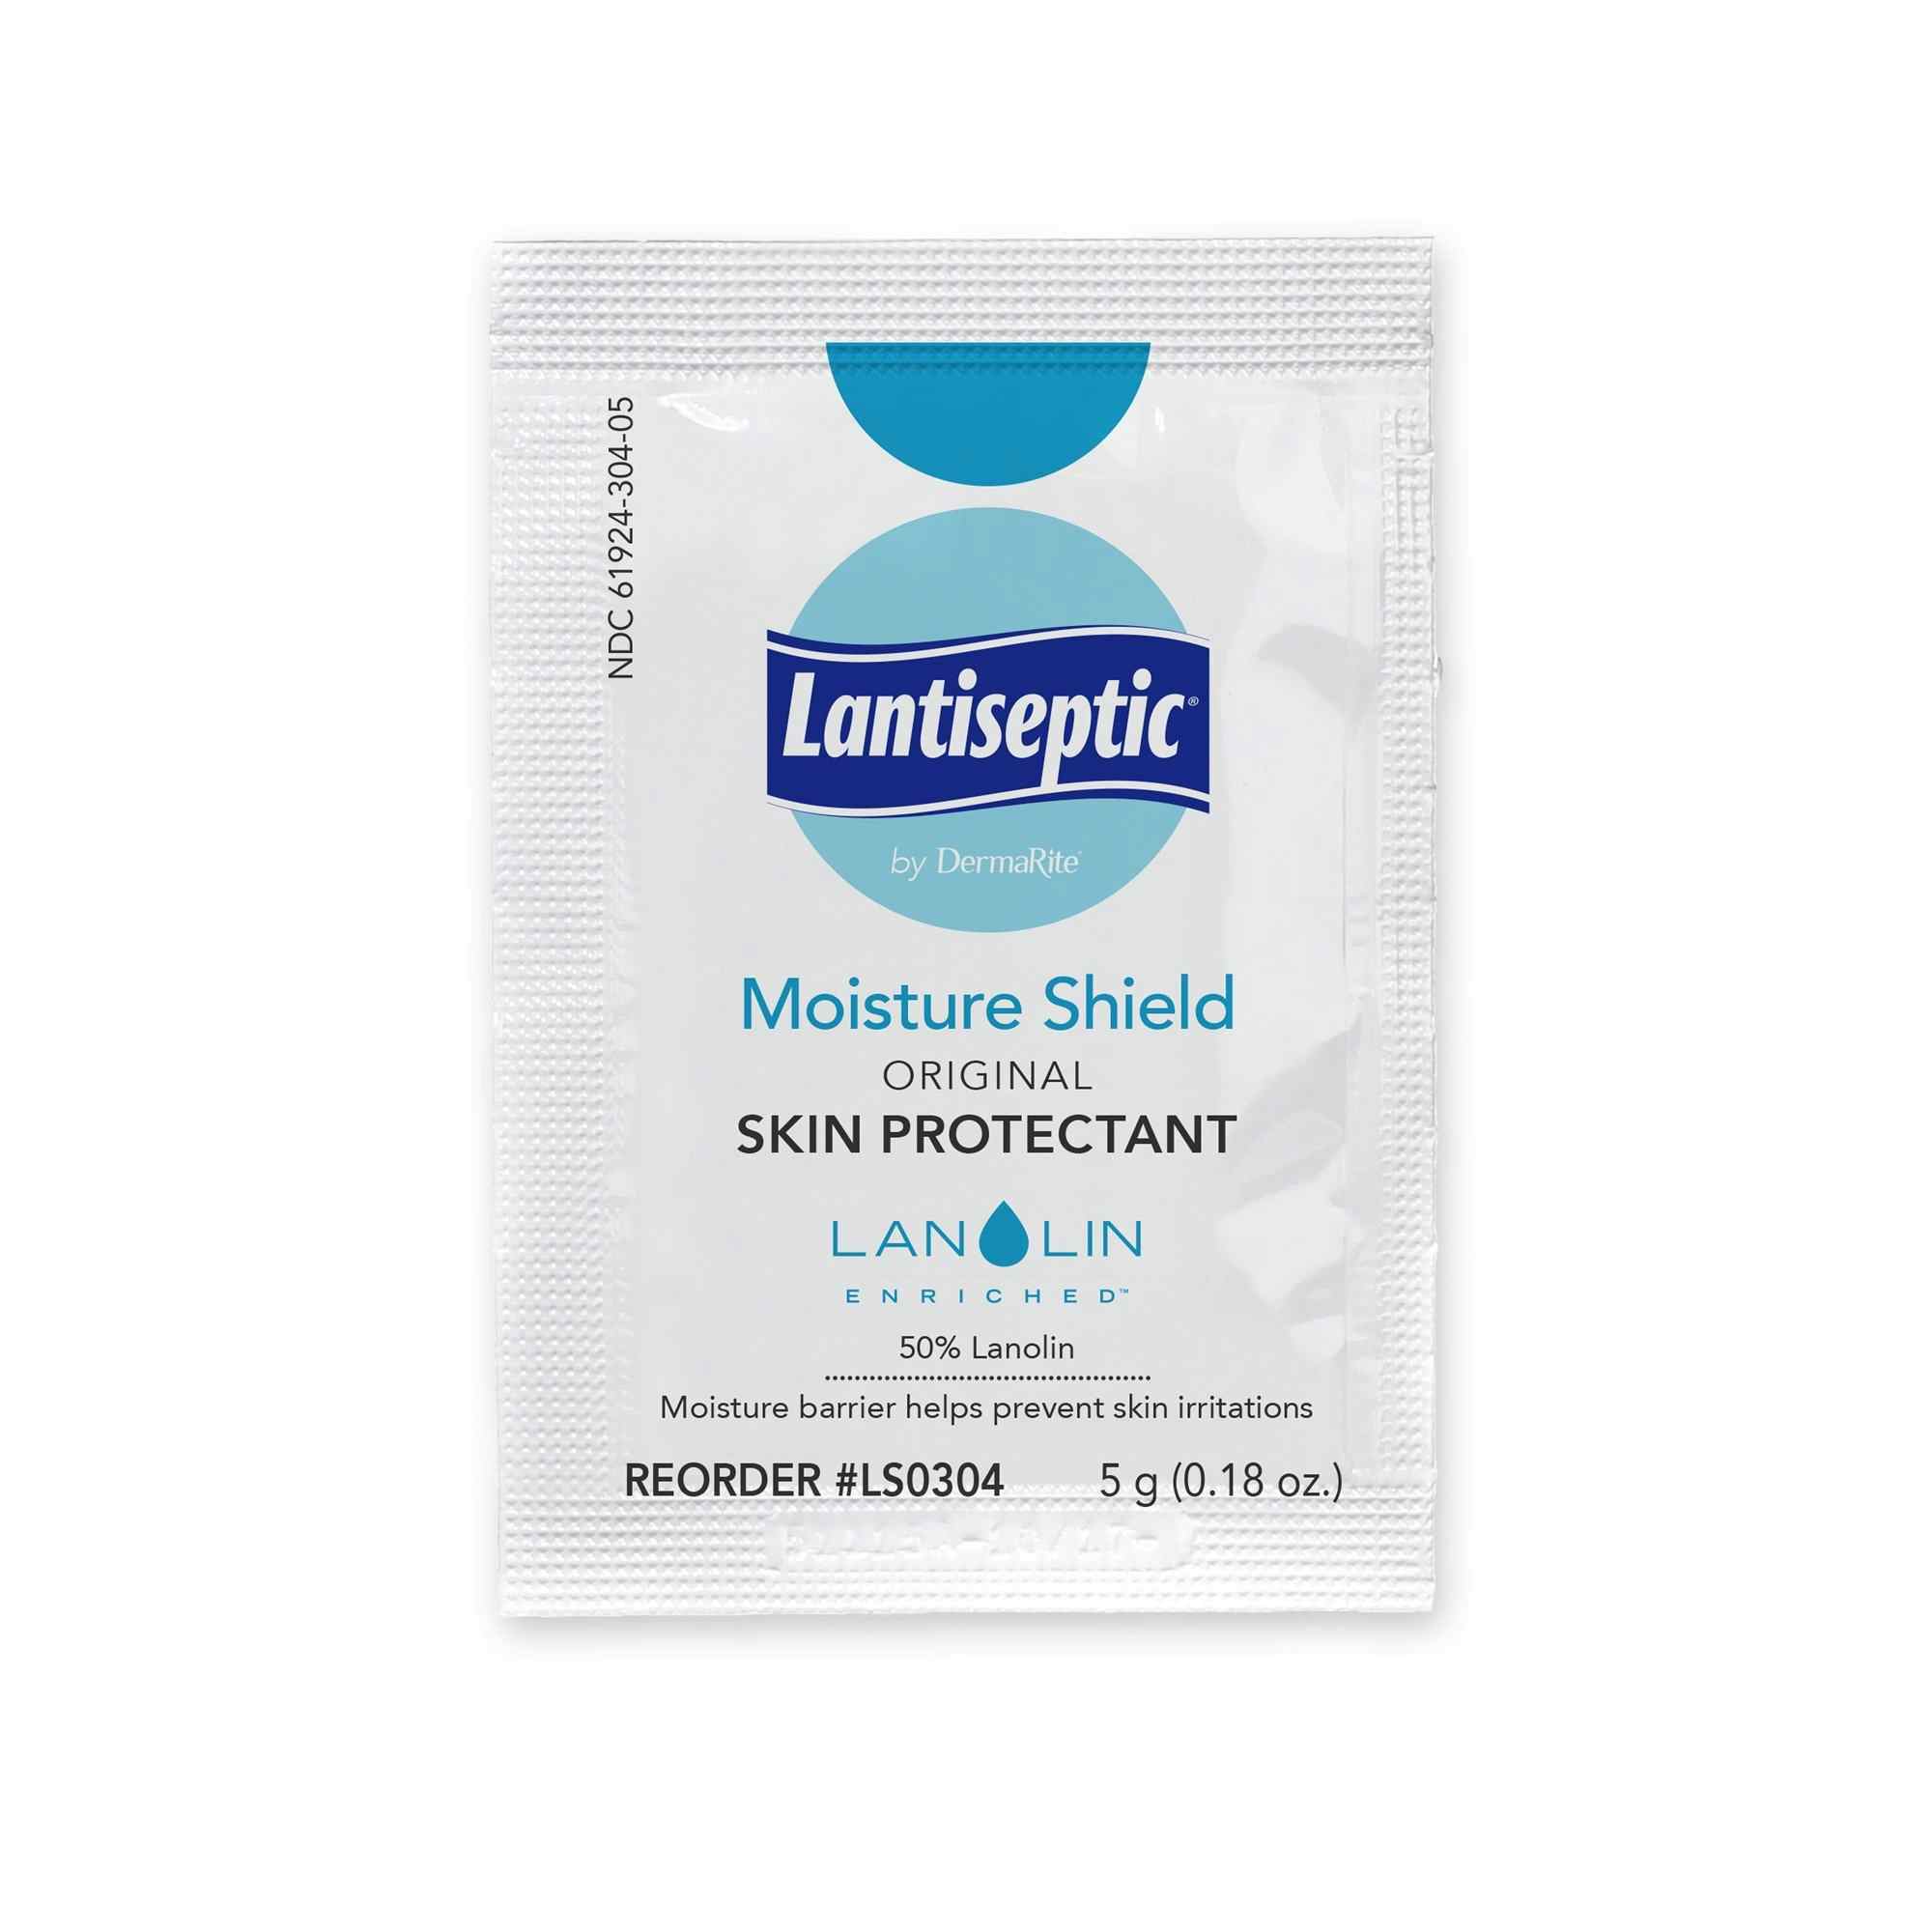 Lantiseptic Moisture Shield Original Skin Protectant , LS0304, 5 g - Case of 288